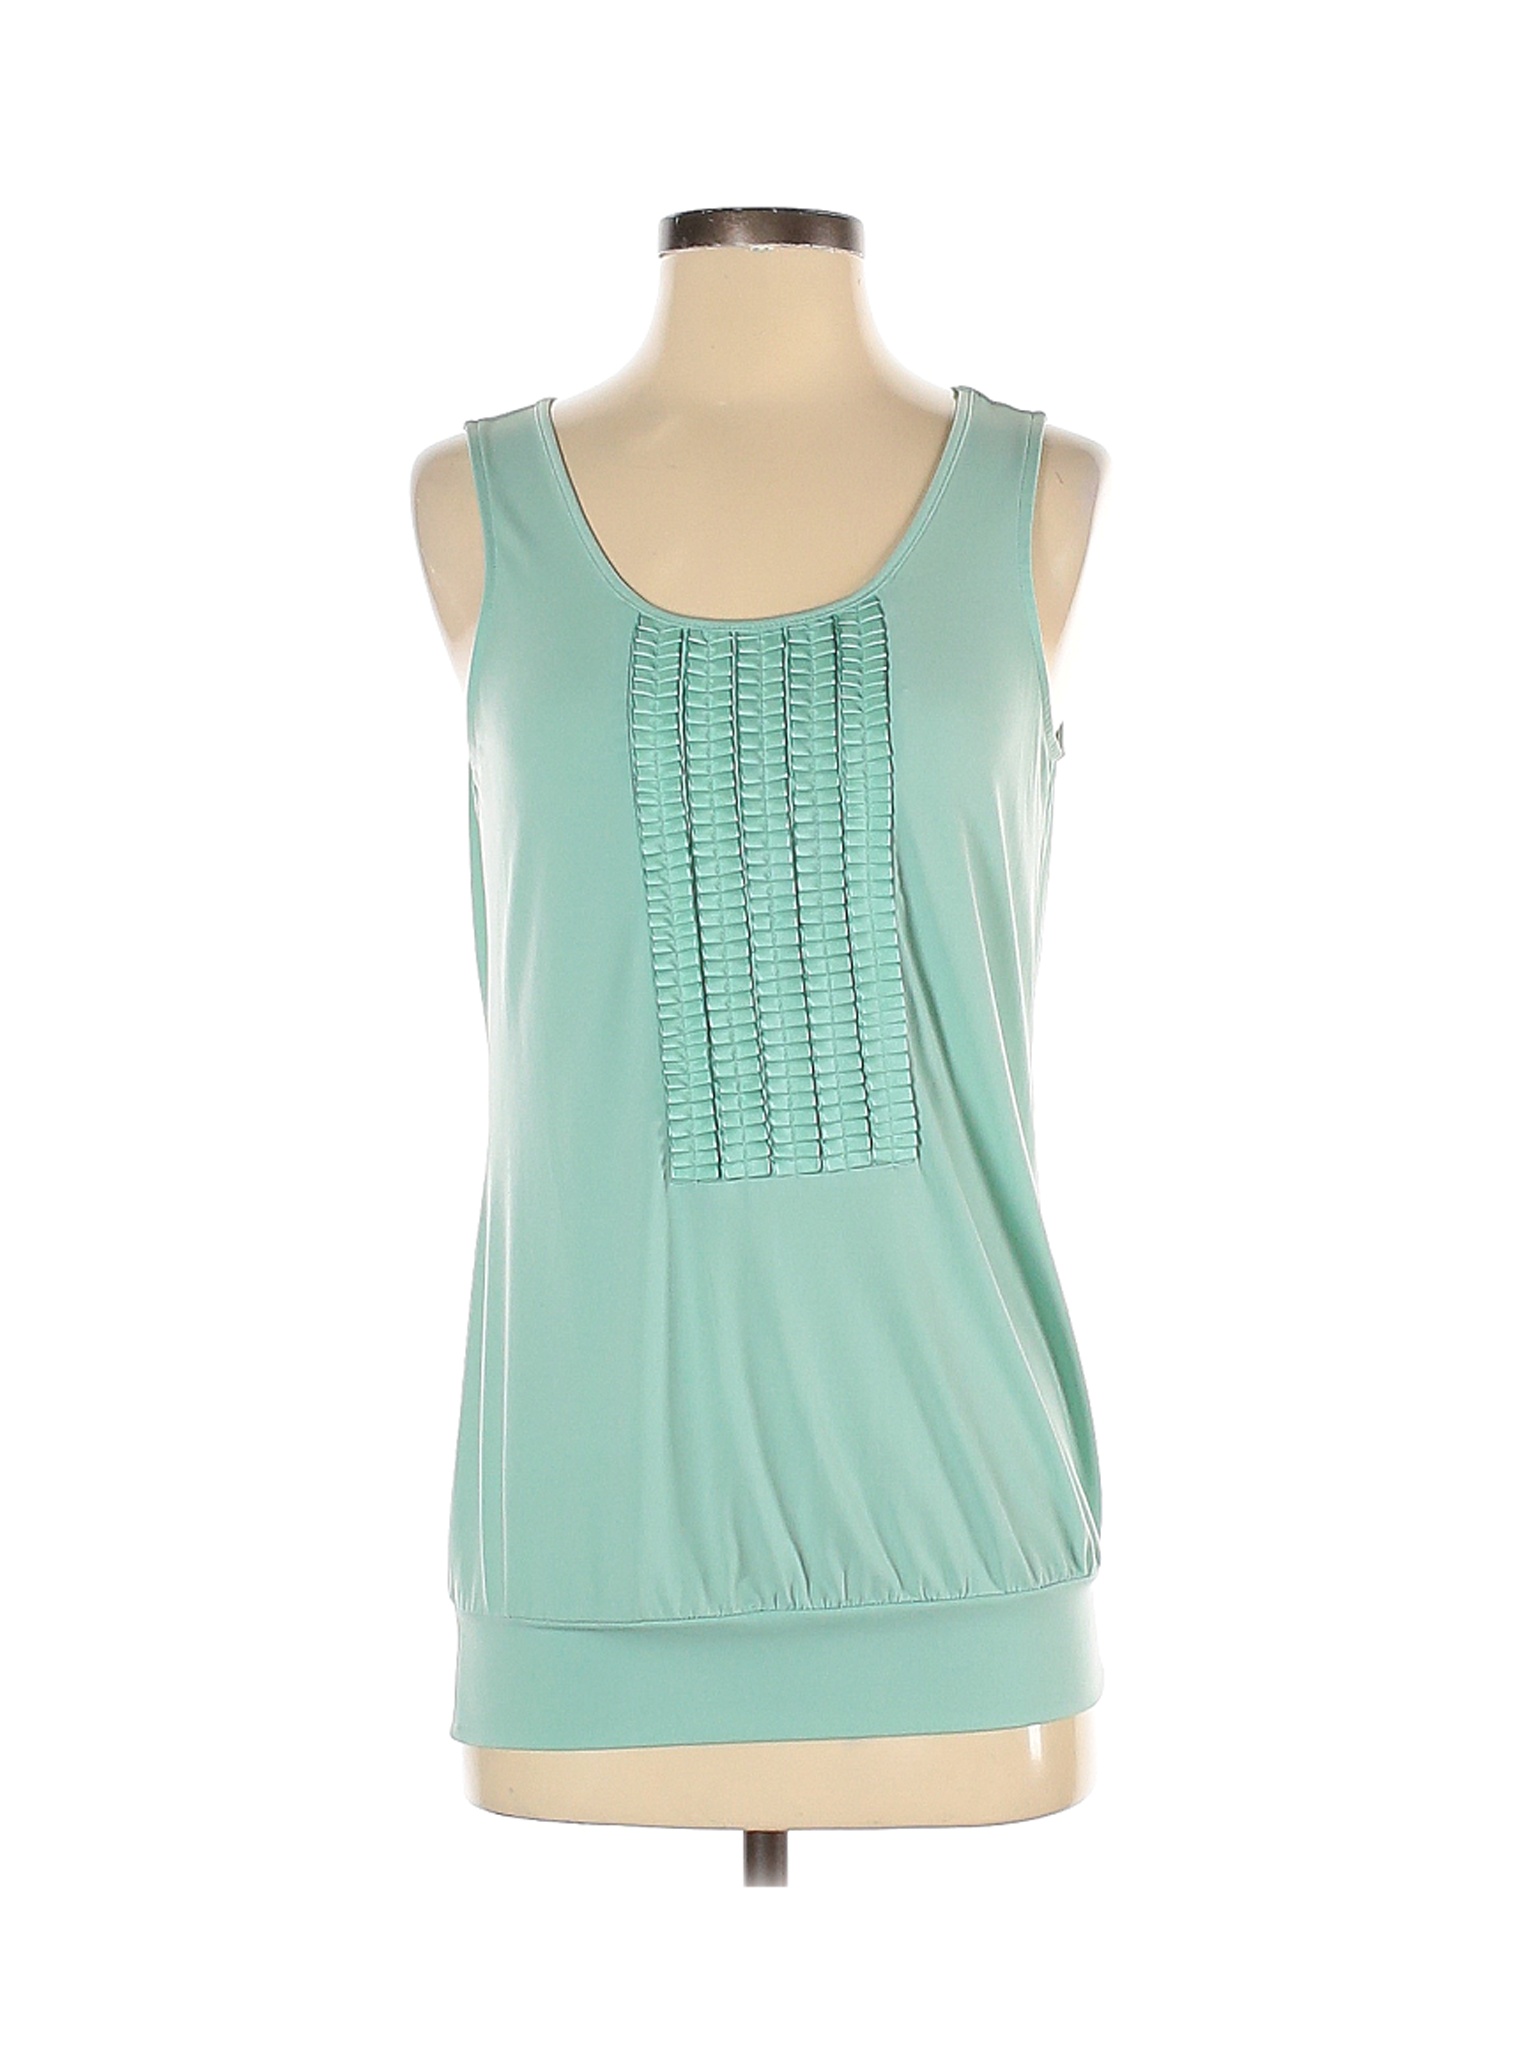 The Limited Women Green Sleeveless Top S | eBay